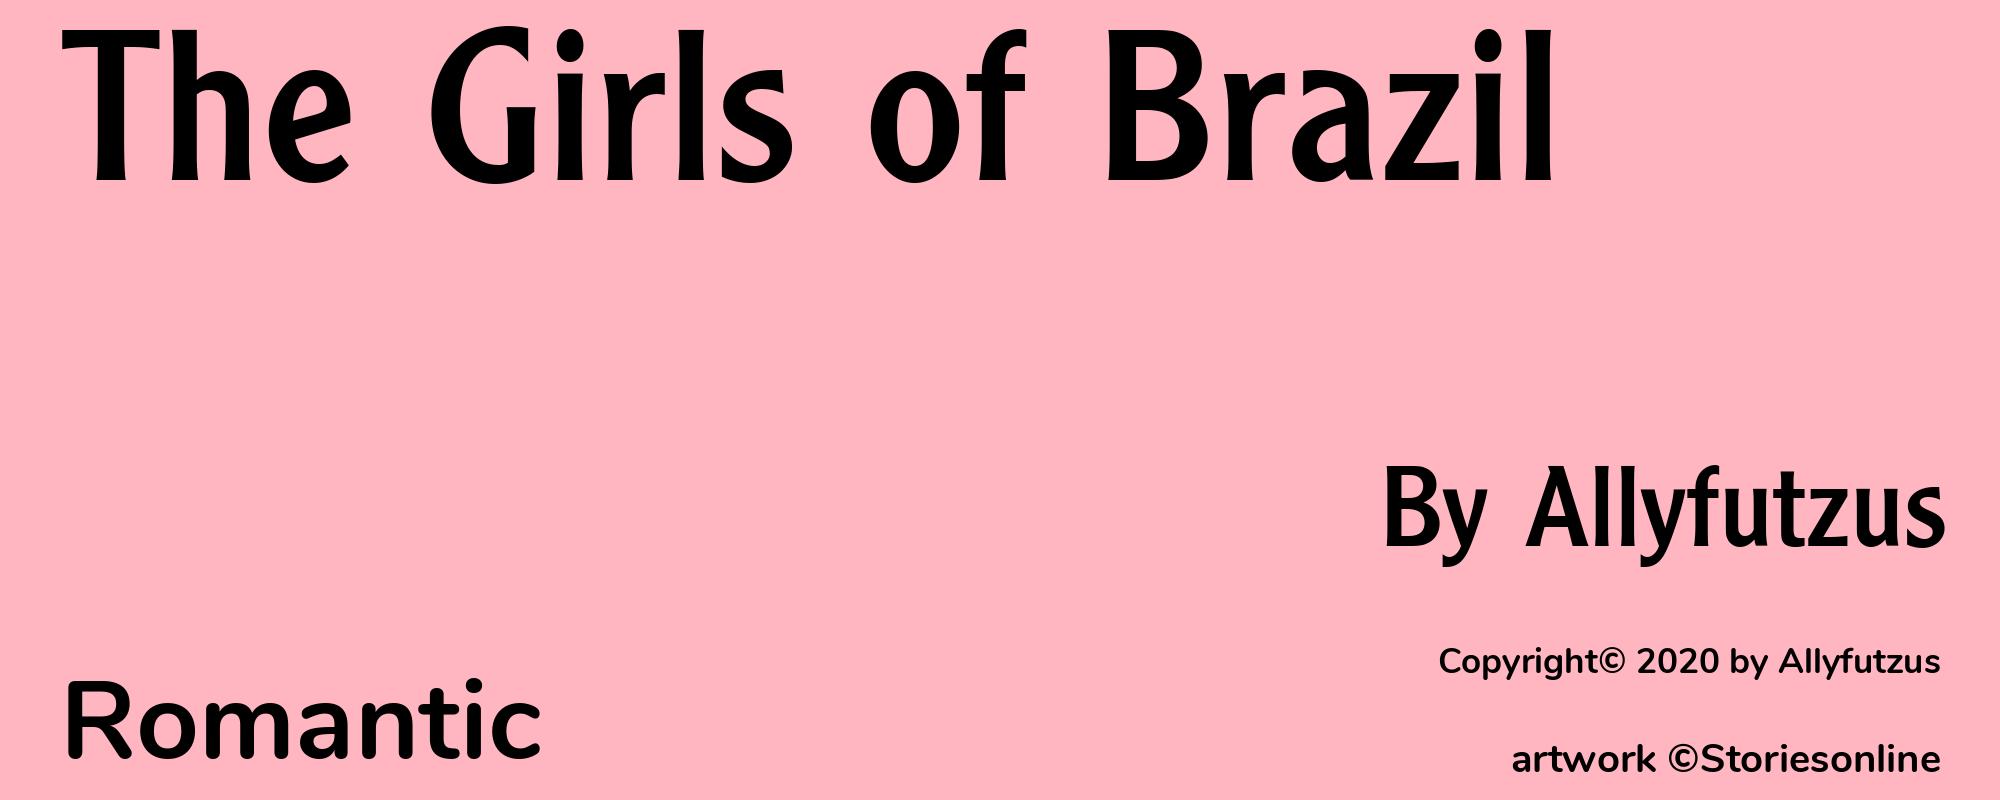 The Girls of Brazil - Cover